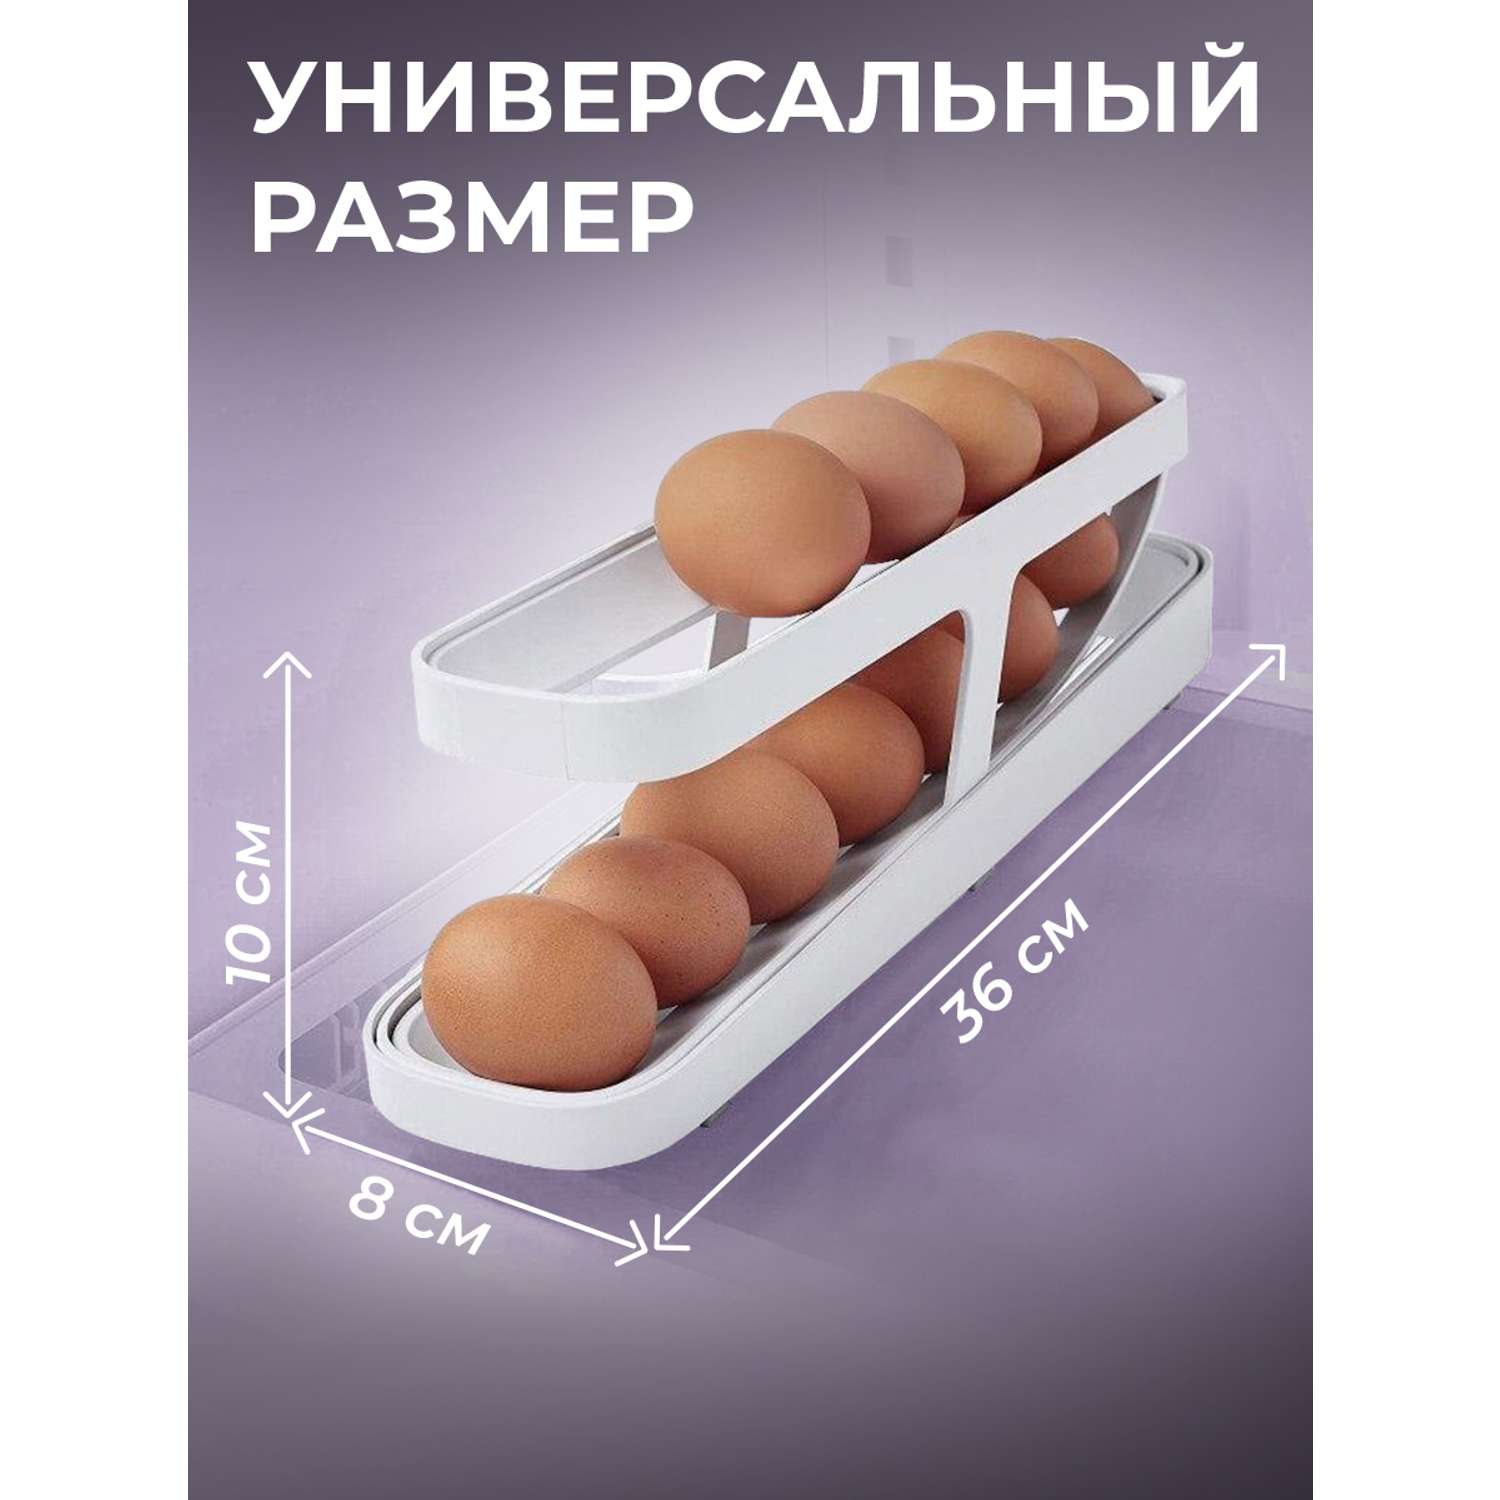 Подставка для яиц Conflate с подкатом - фото 2